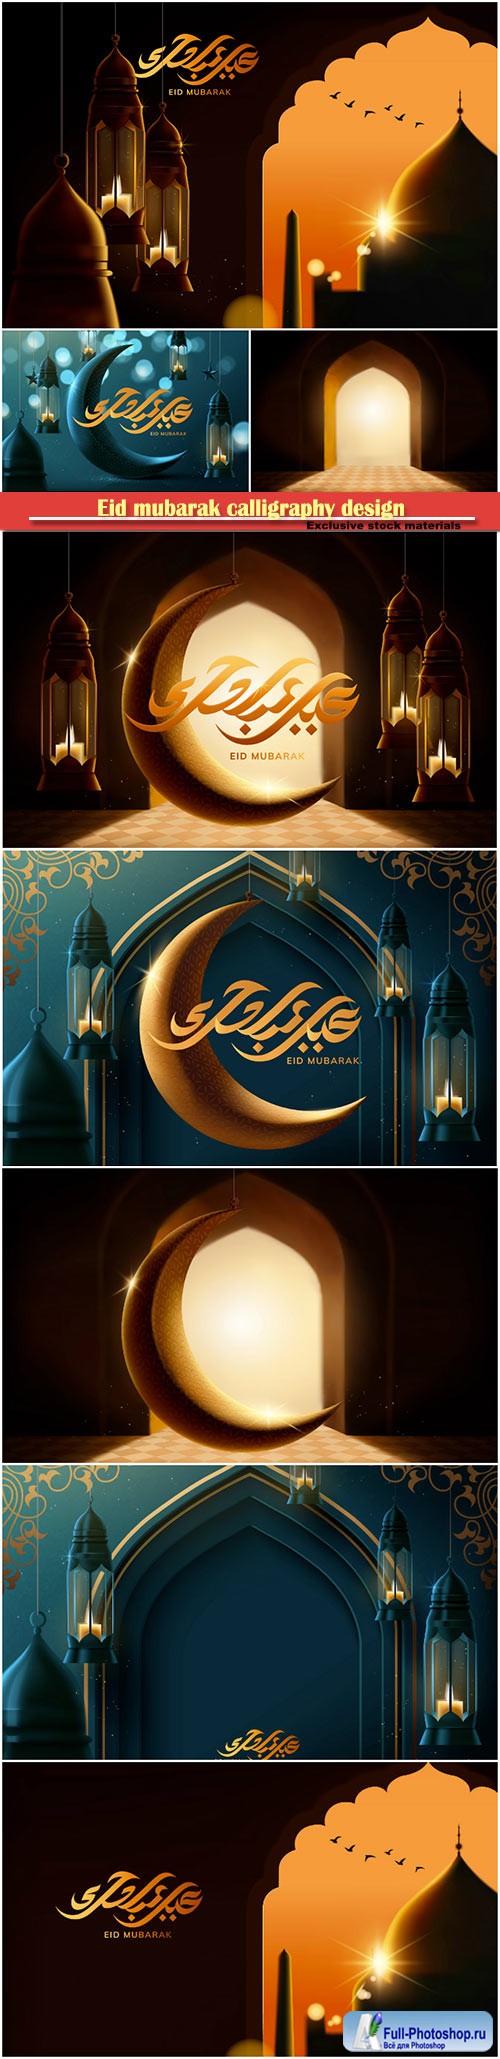 Eid mubarak calligraphy design, happy holiday written in Arabic